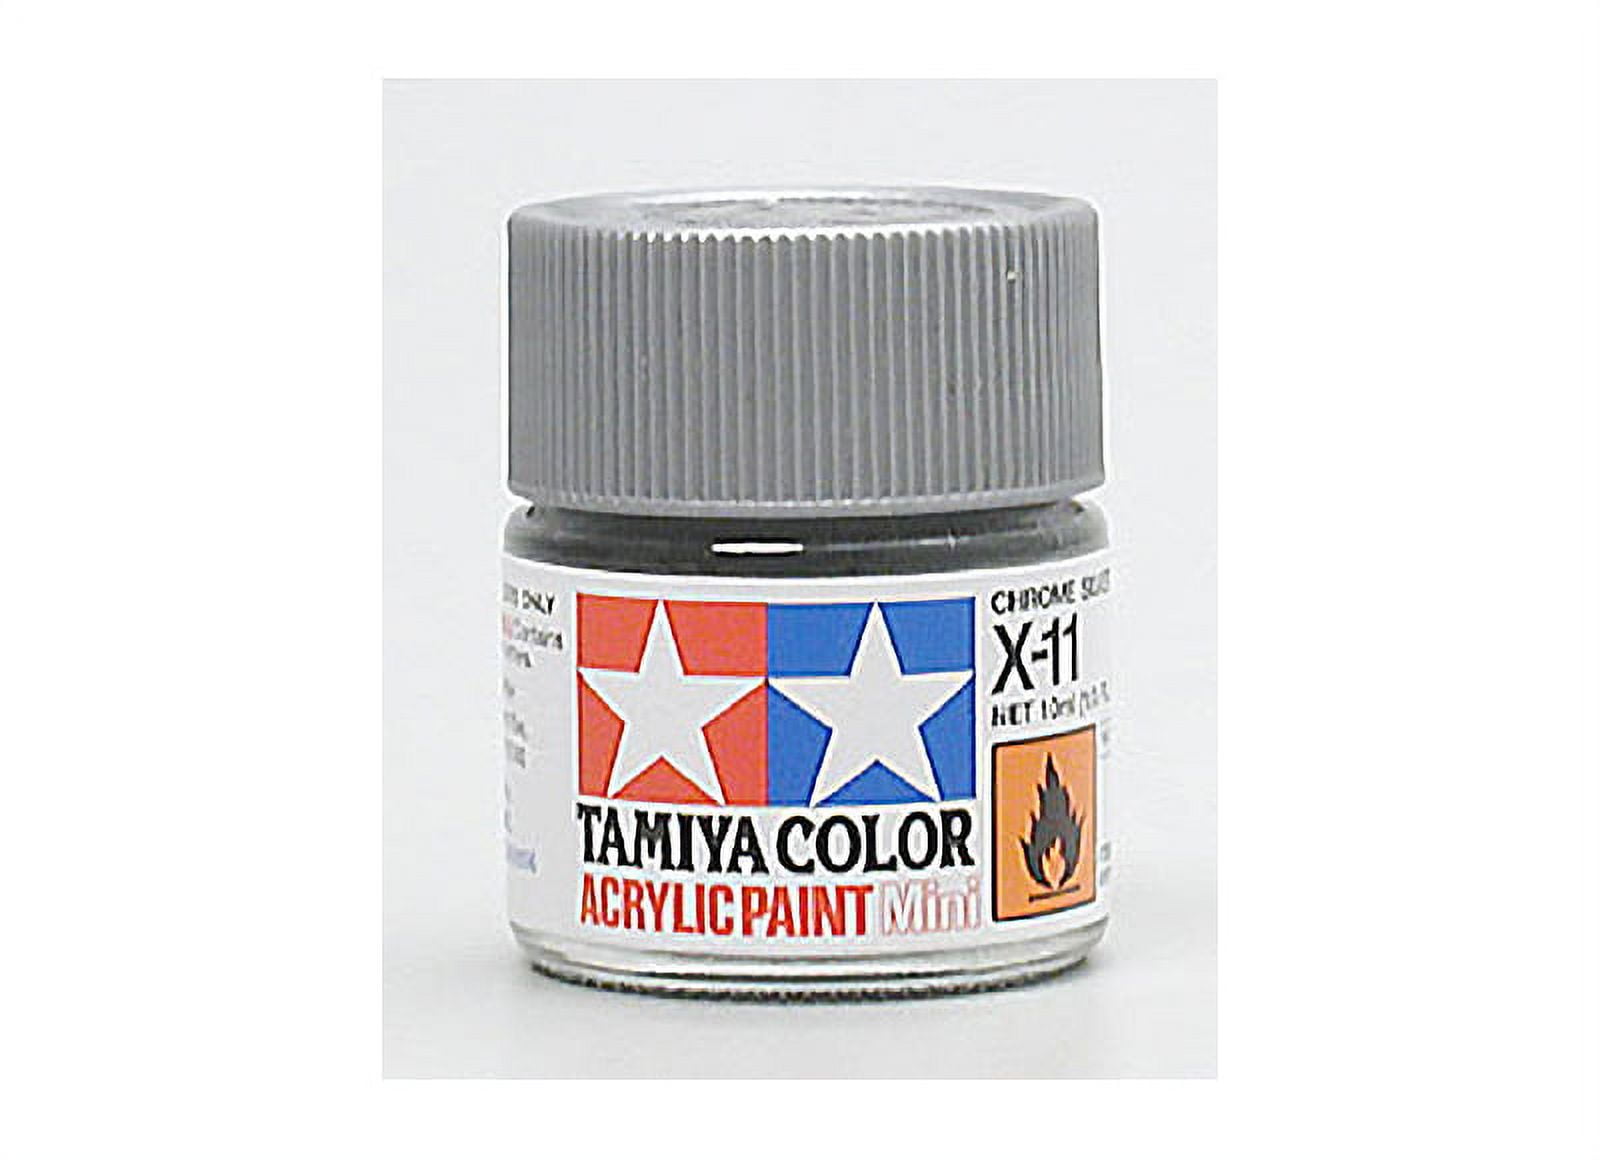  Tamiya Models X-11 Mini Acrylic Paint, Chrome Silver : Arts,  Crafts & Sewing